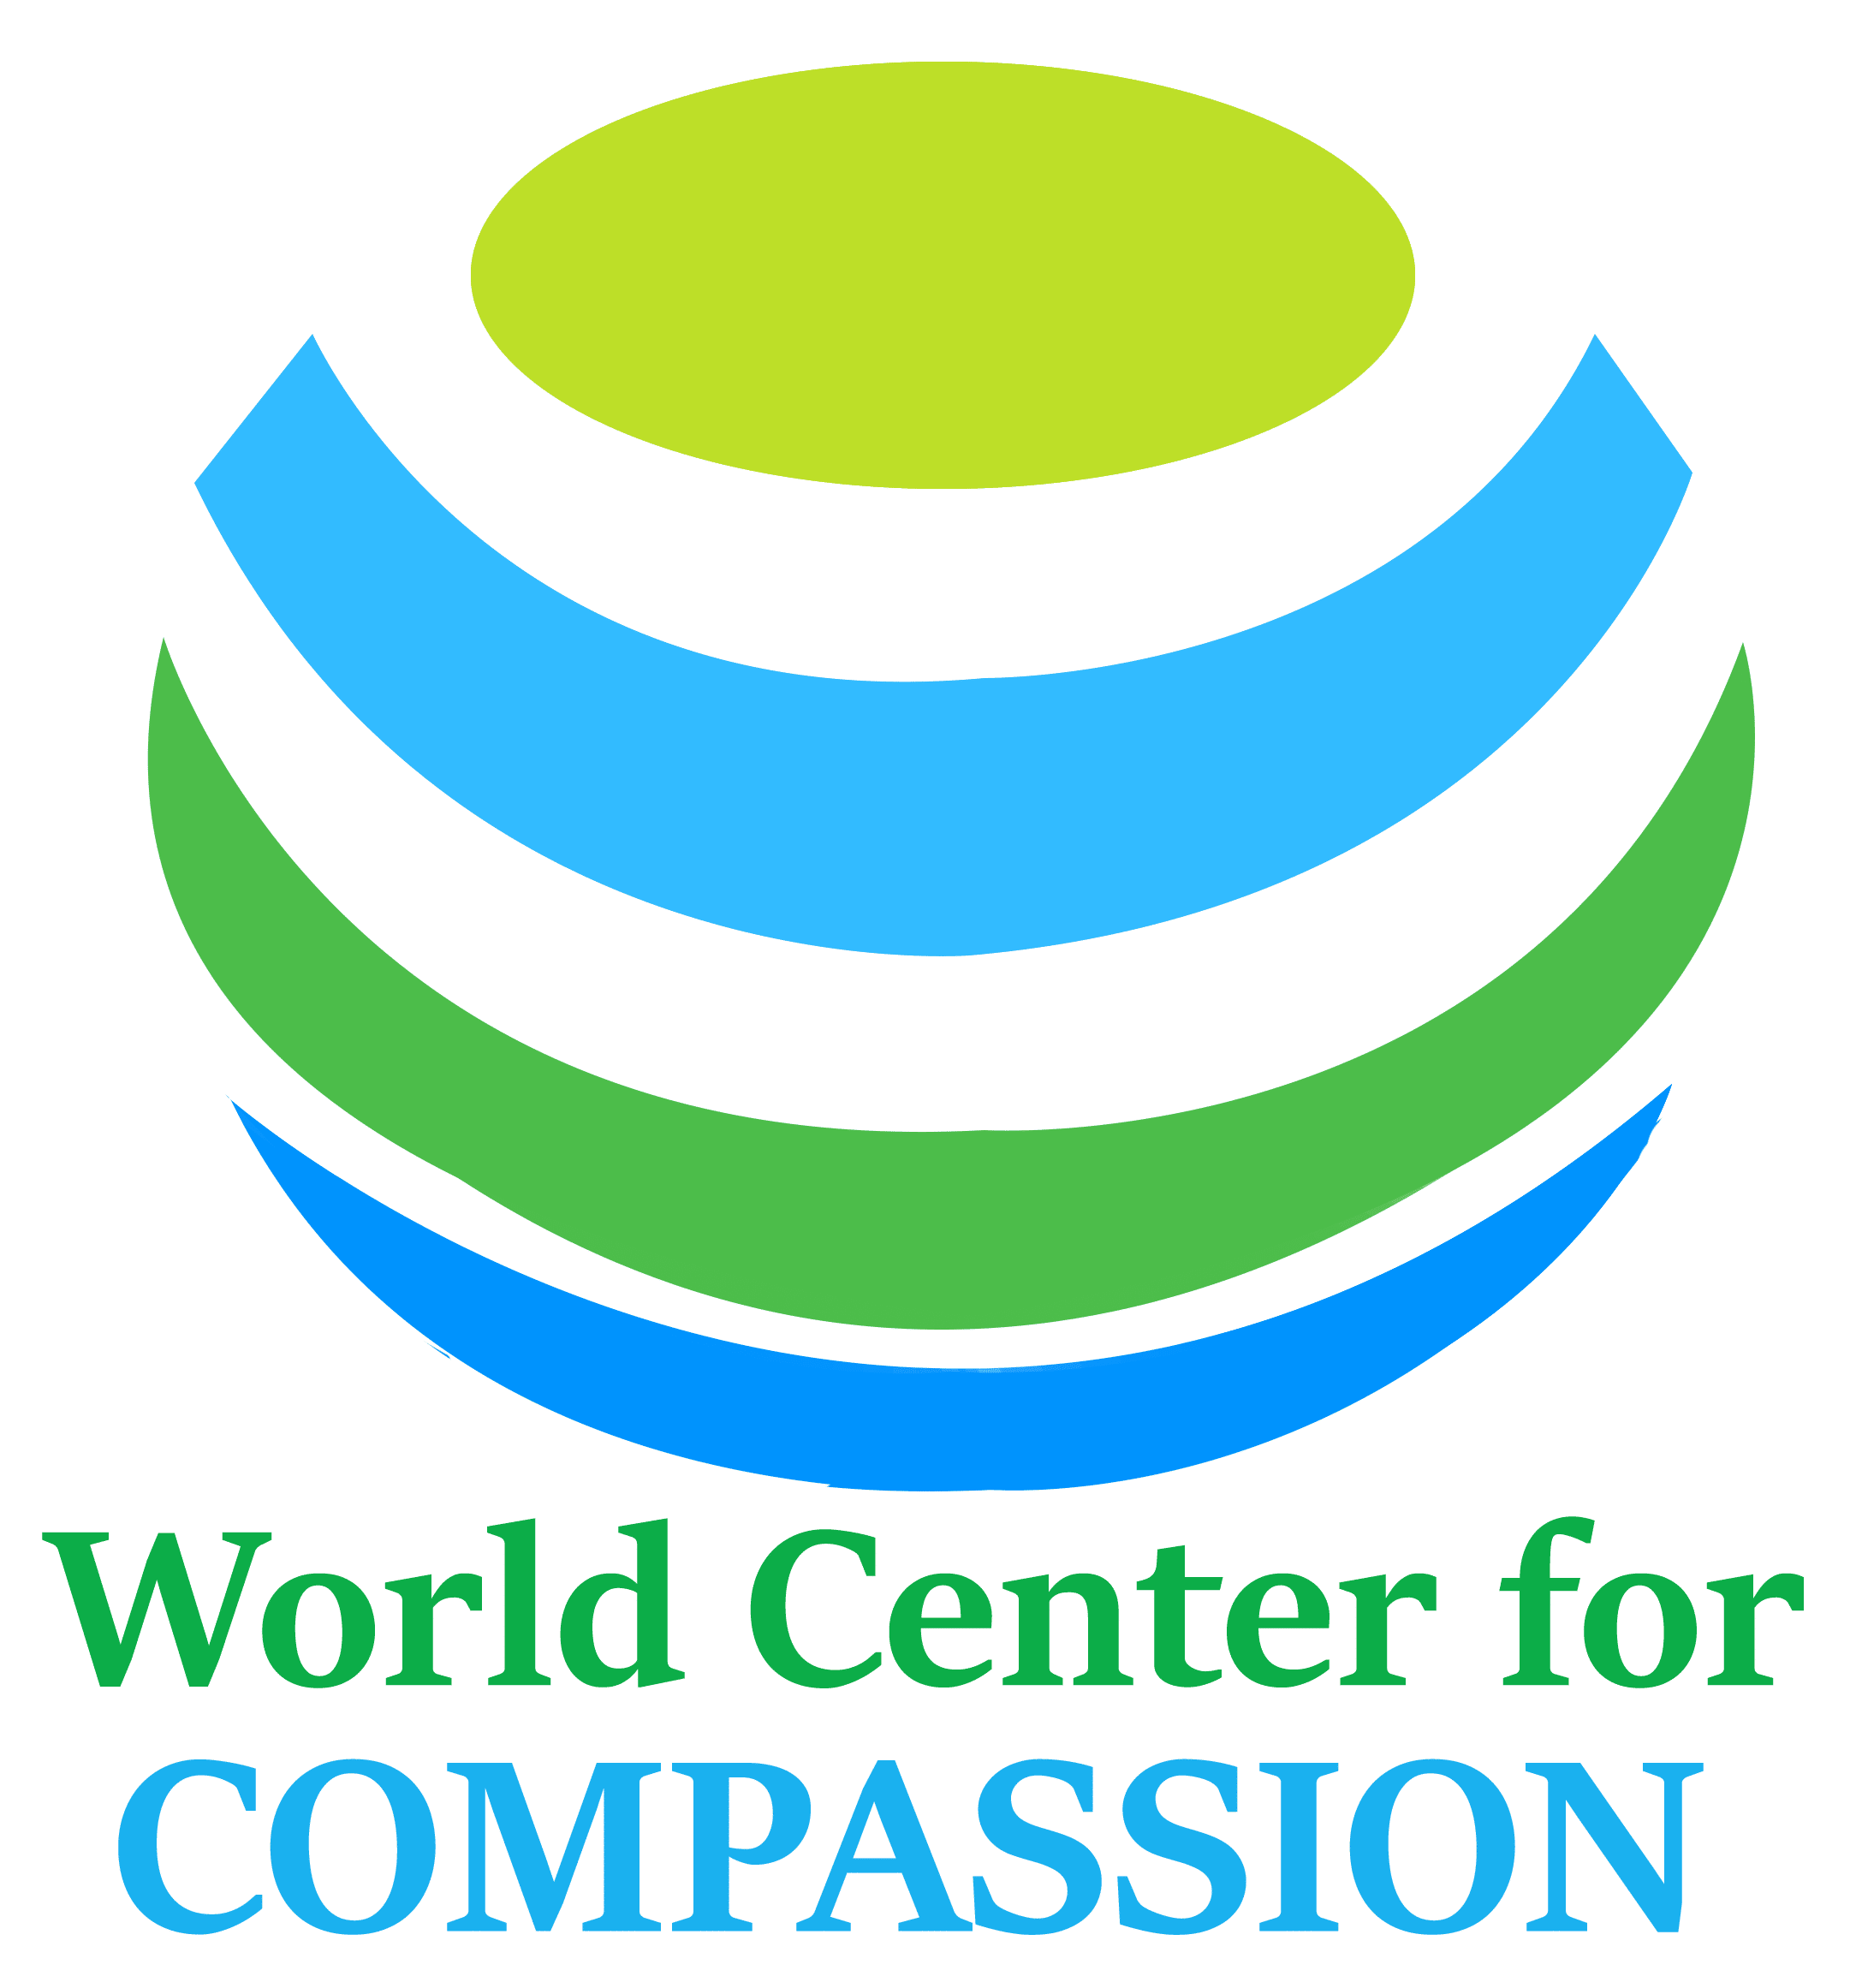 World Center for Compassion